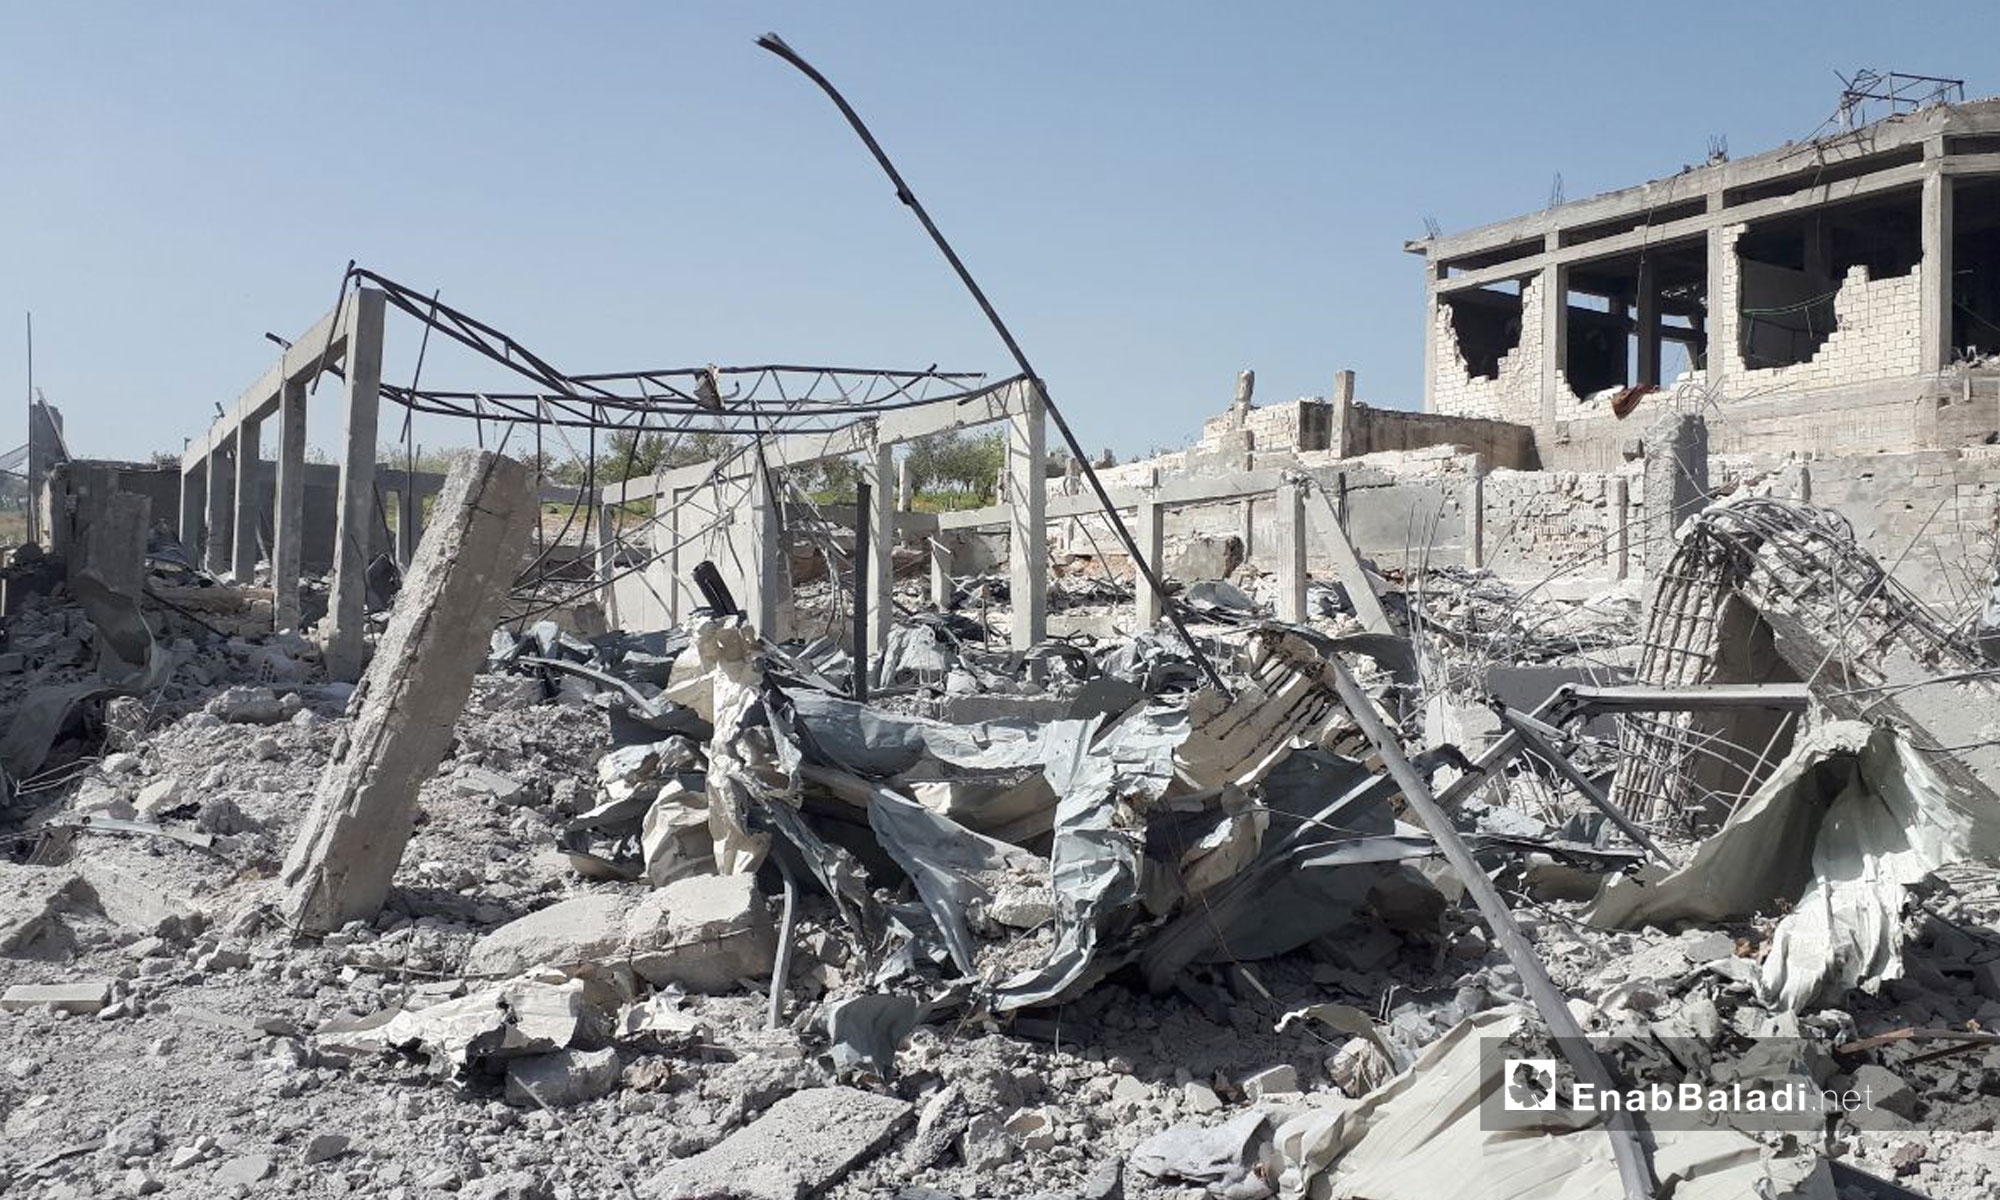 Destruction Caused by Russian Aerial Shelling in the village Urum al-Jawz, Southern rural Idlib, April 14, 2019 (Enab Baladi)